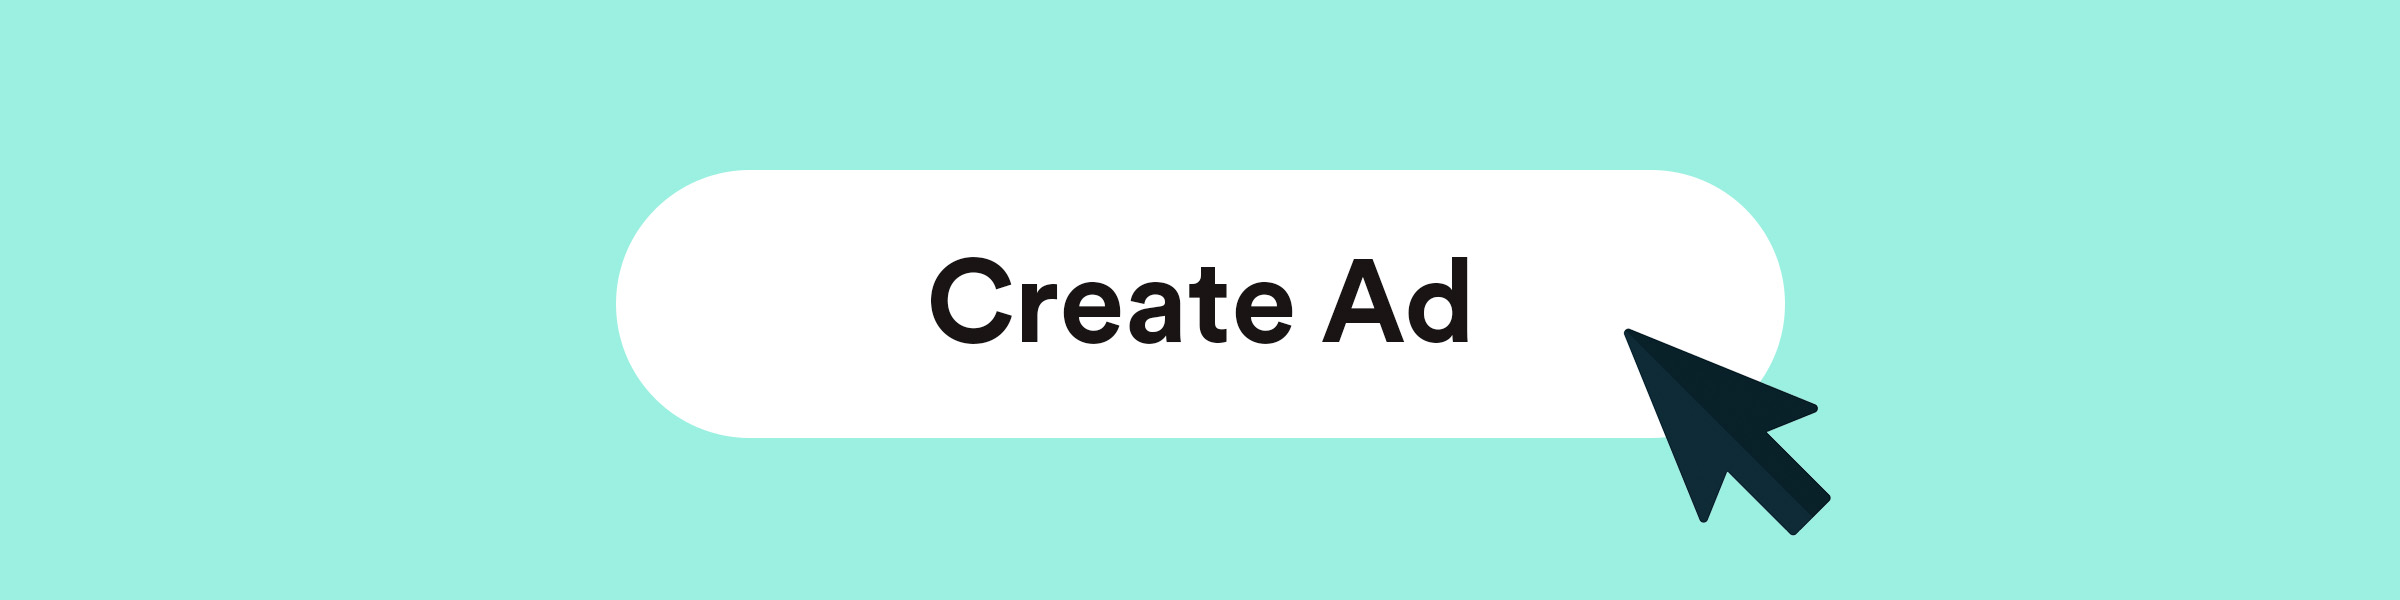 Tech Create Ad Image